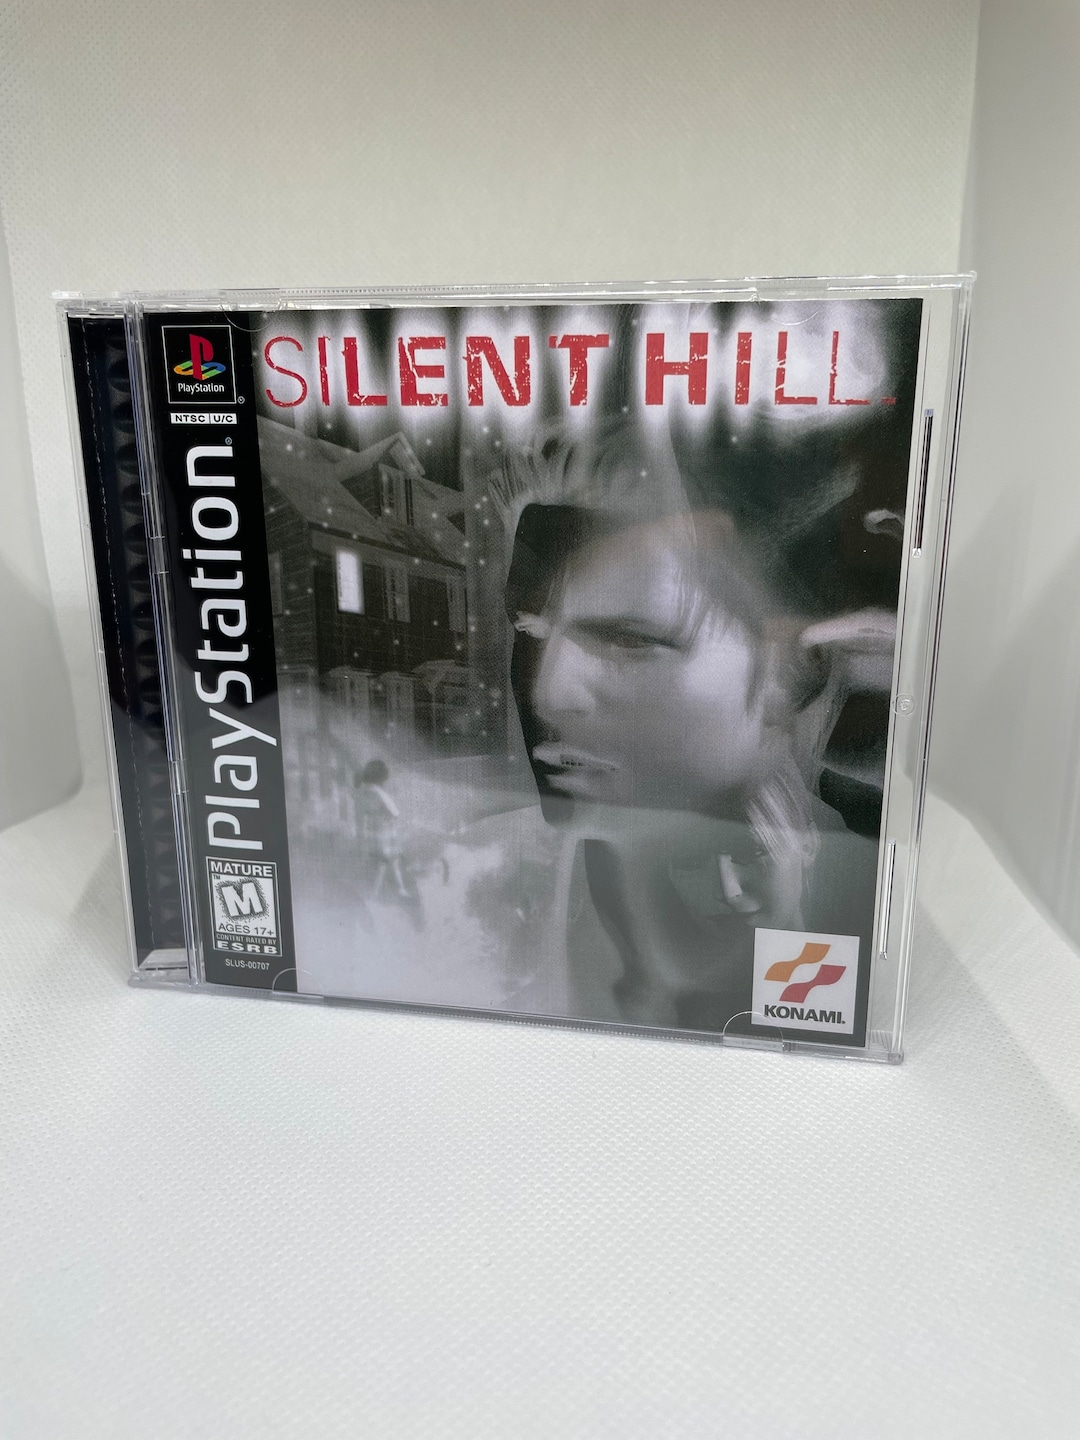 Silen Hill 2 Remake Imaginary Edition Steelbook